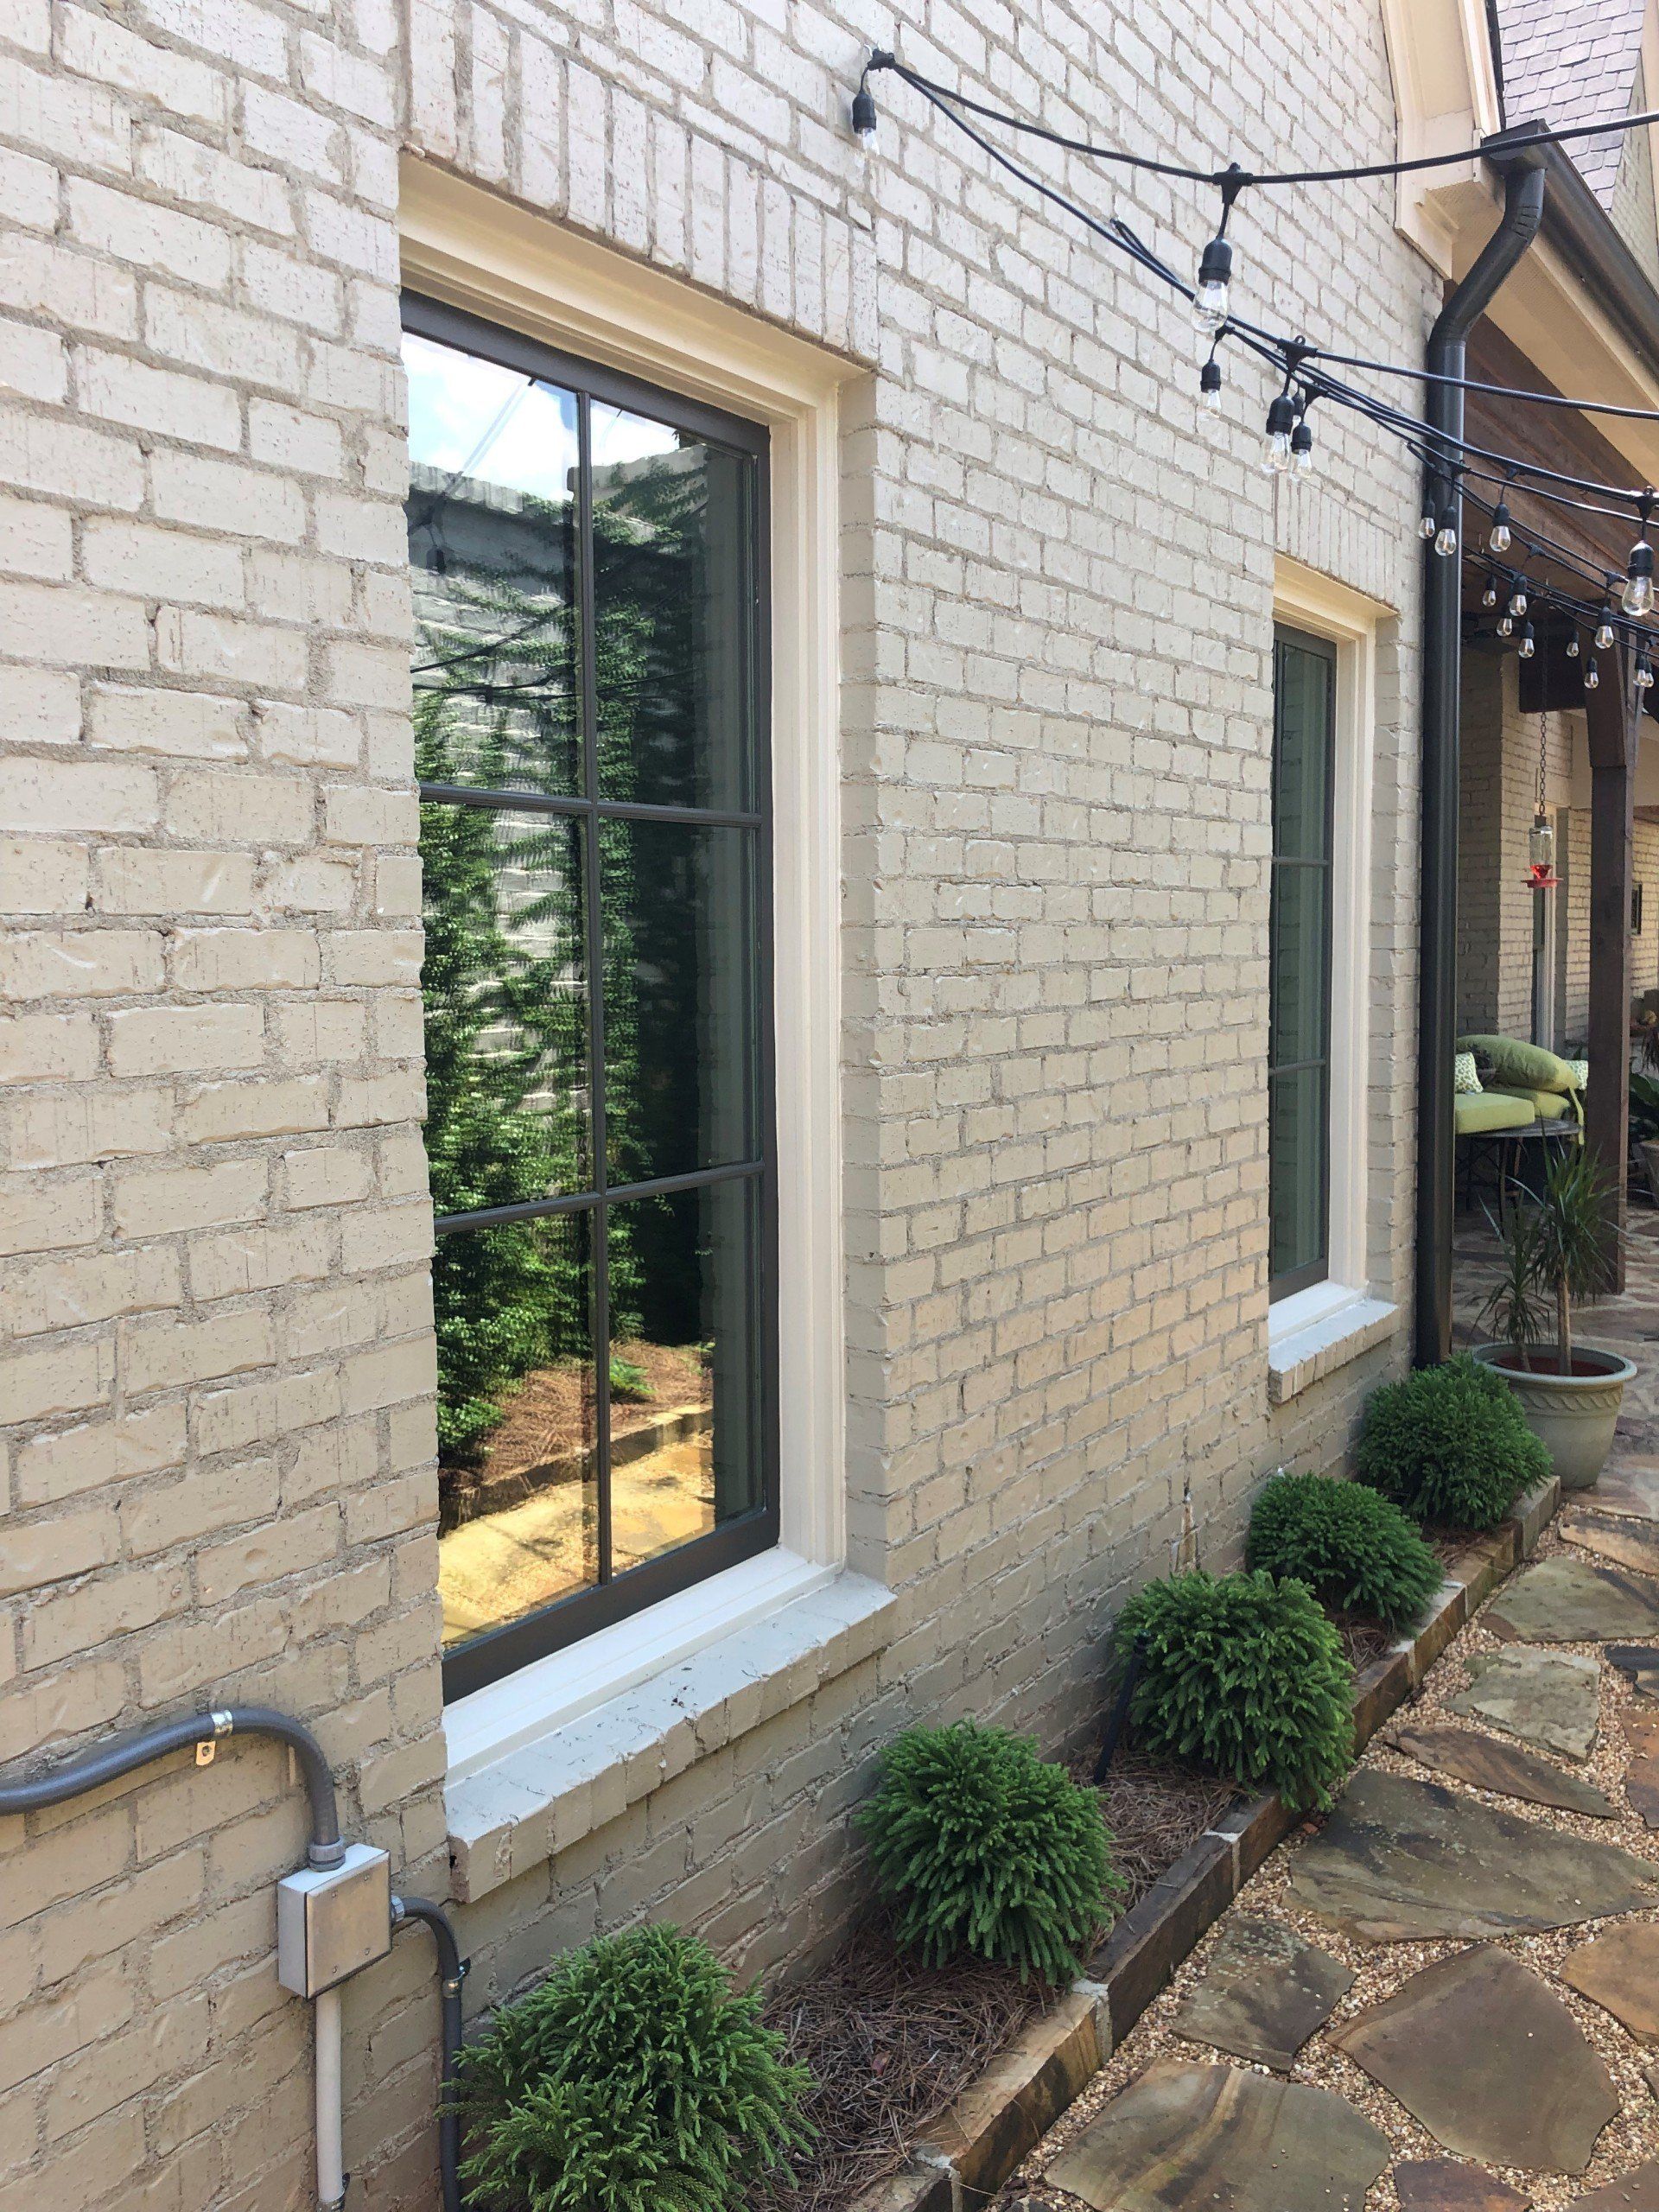 Residential Tinting service in Birmingham AL - SPF Preferred Tint installed to home windows on 8-7-2019 in Birmingham, AL